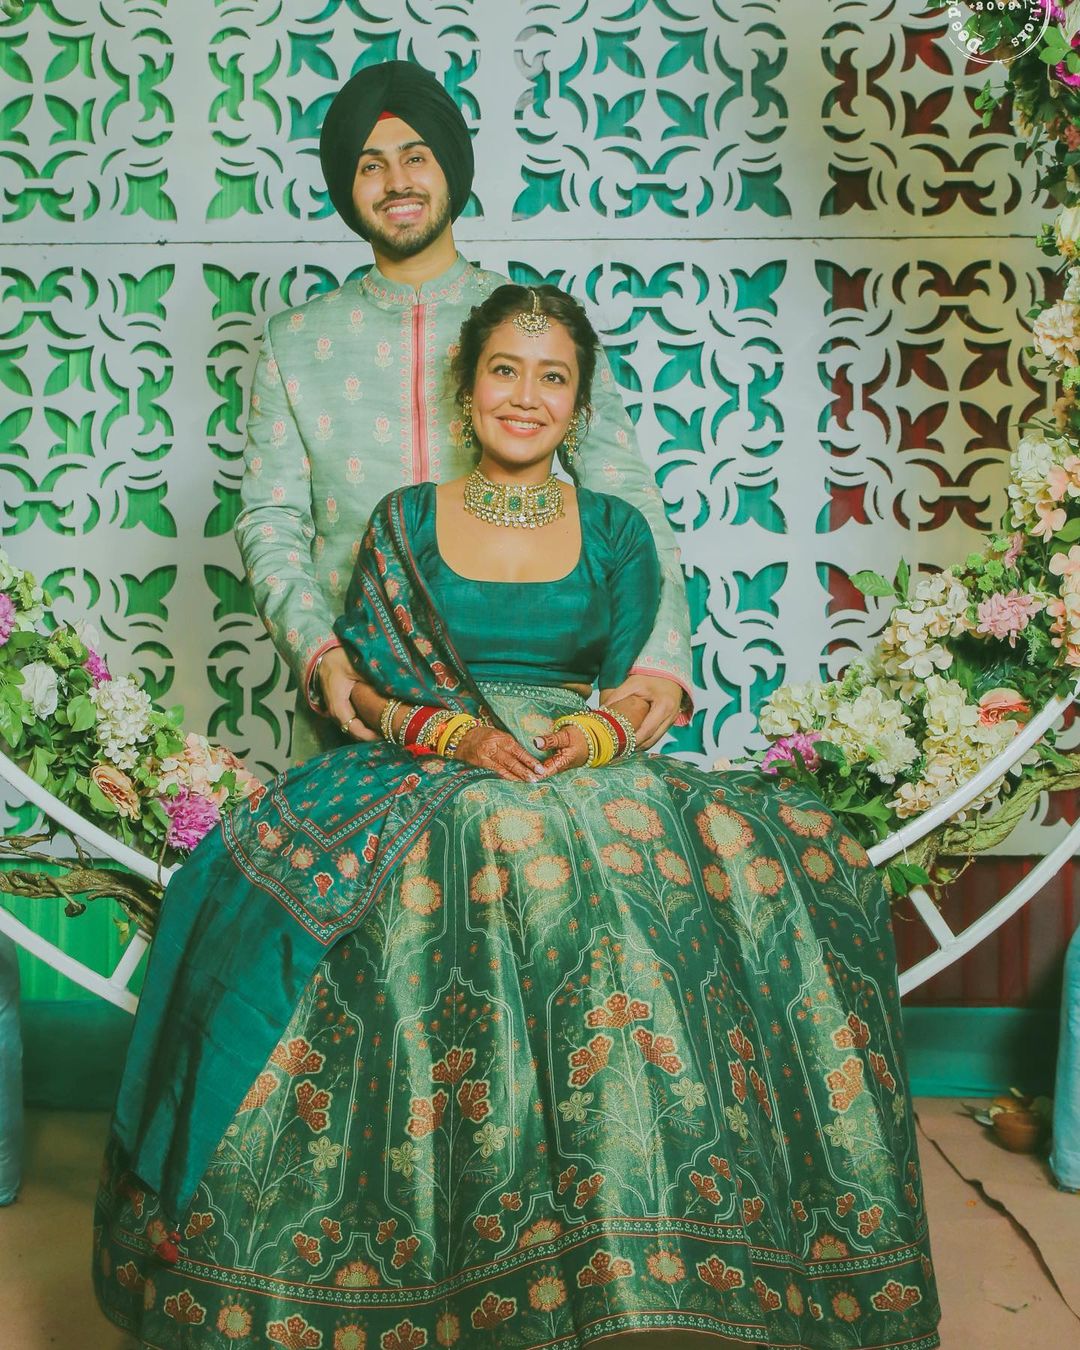 Neha Kakkar’s wedding ceremonies